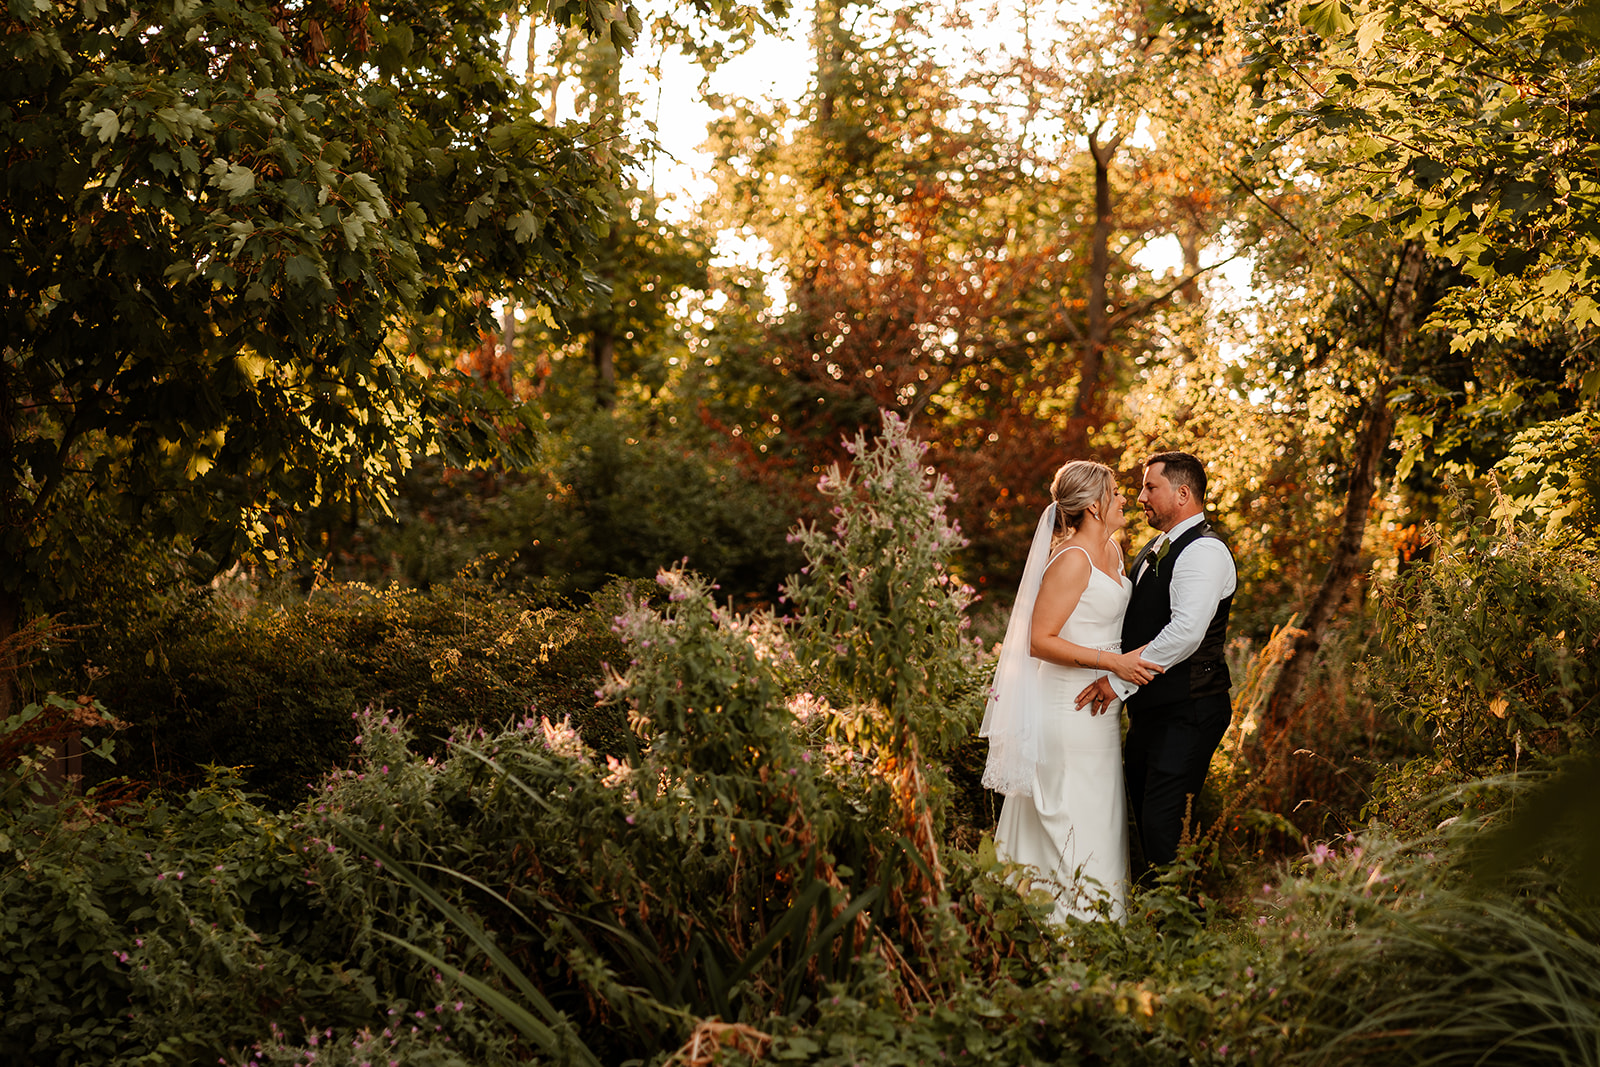 Golden hour couple photos in the gardens for an elegant Kingston Country Courtyard wedding